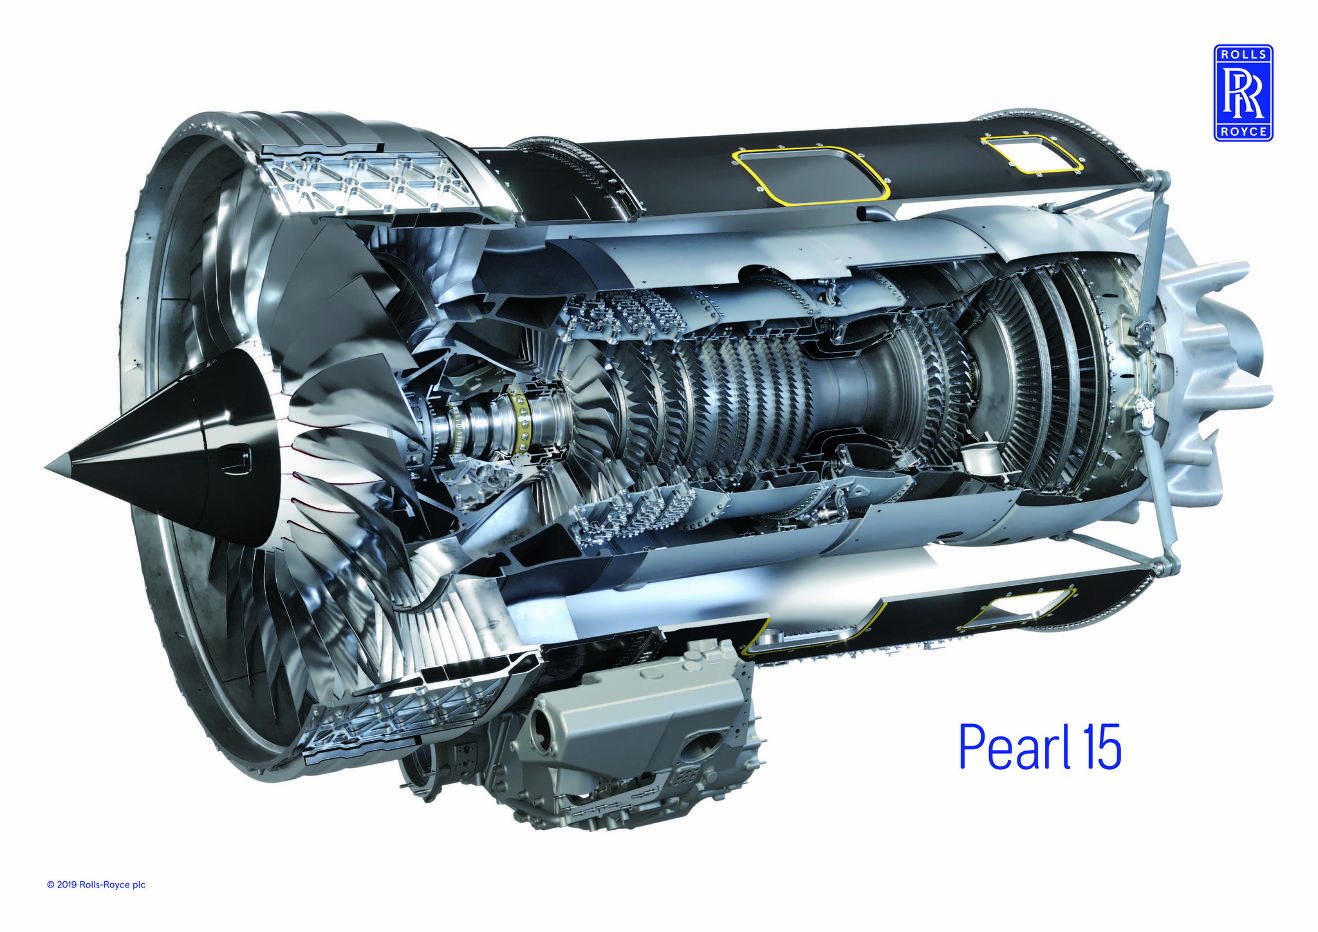 Rolls-Royce livre ses premiers moteurs Pearl 15